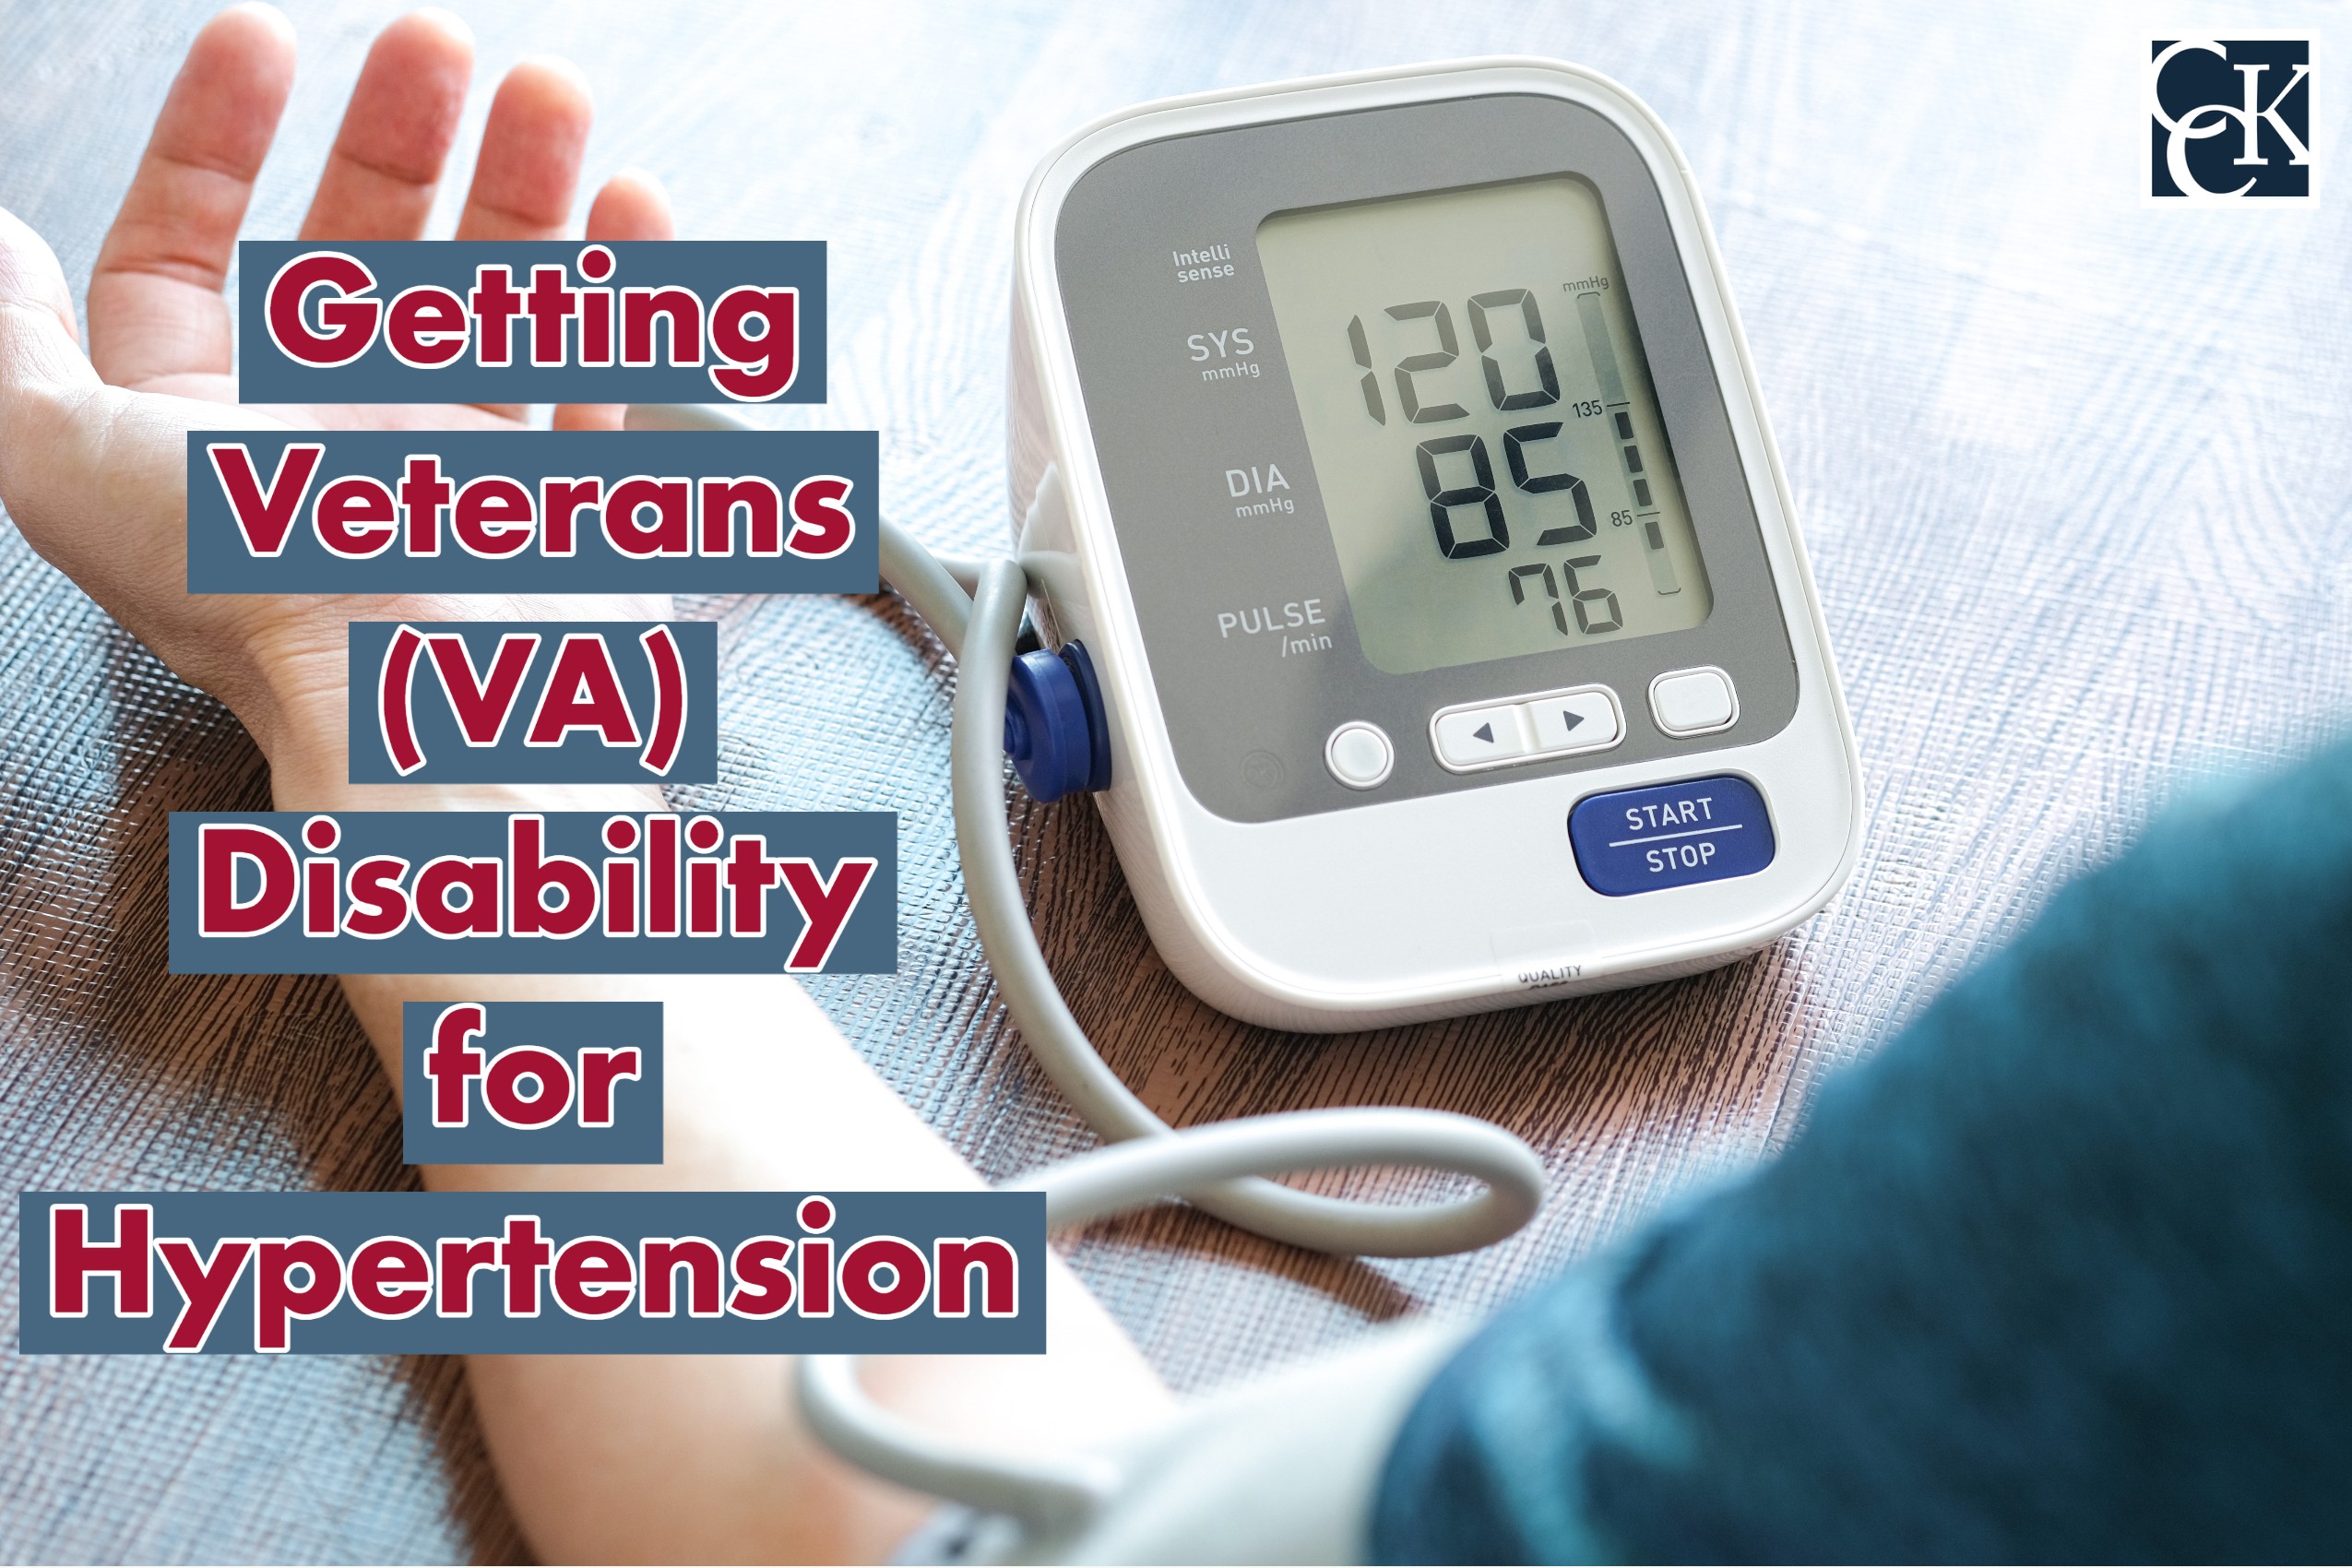 https://cck-law.com/wp-content/uploads/2019/07/Getting-Veterans-VA-Disability-for-Hypertension-1.jpg